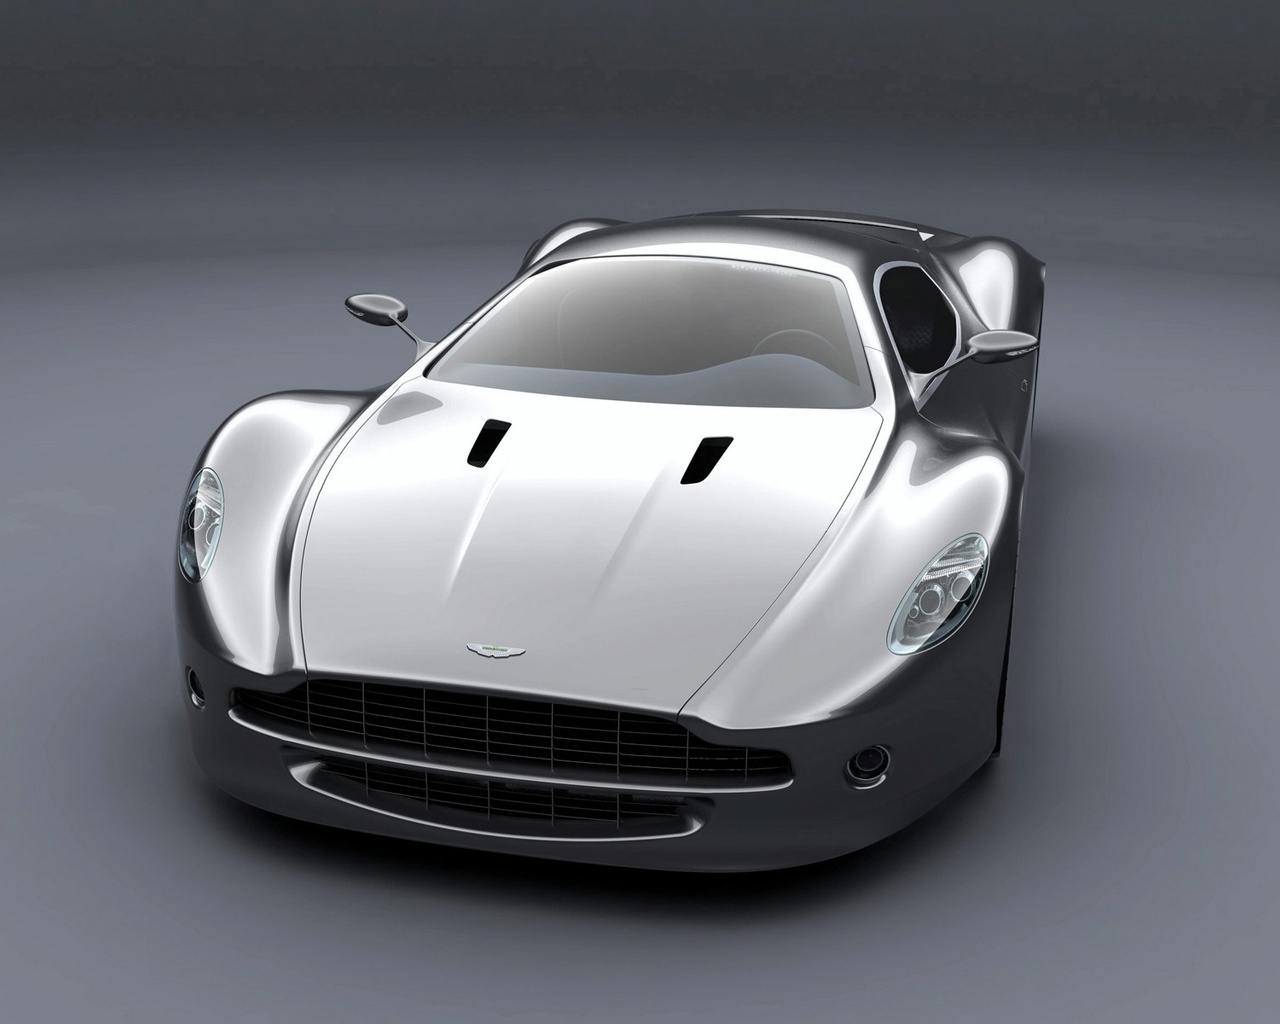 Aston Martin AMV 10 for 1280 x 1024 resolution